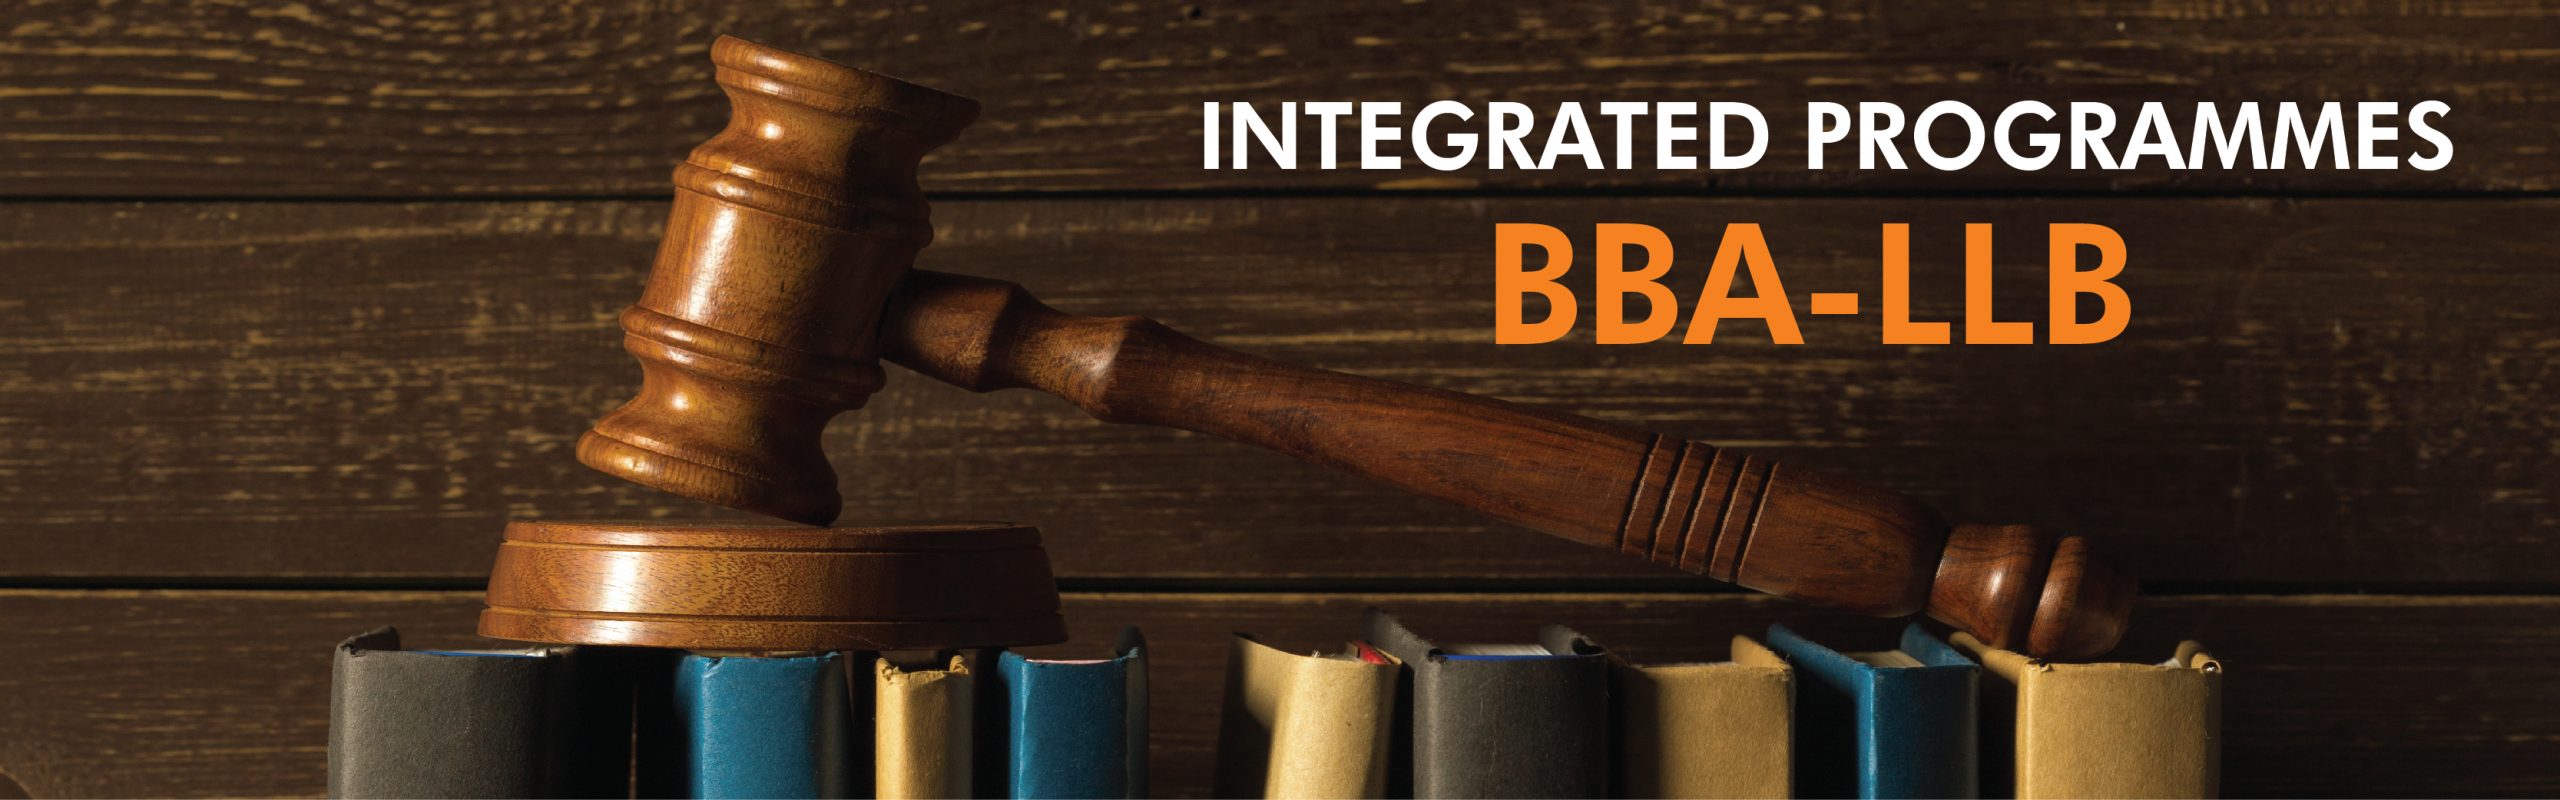 Integrated BBA-LLB Programmes at UMU